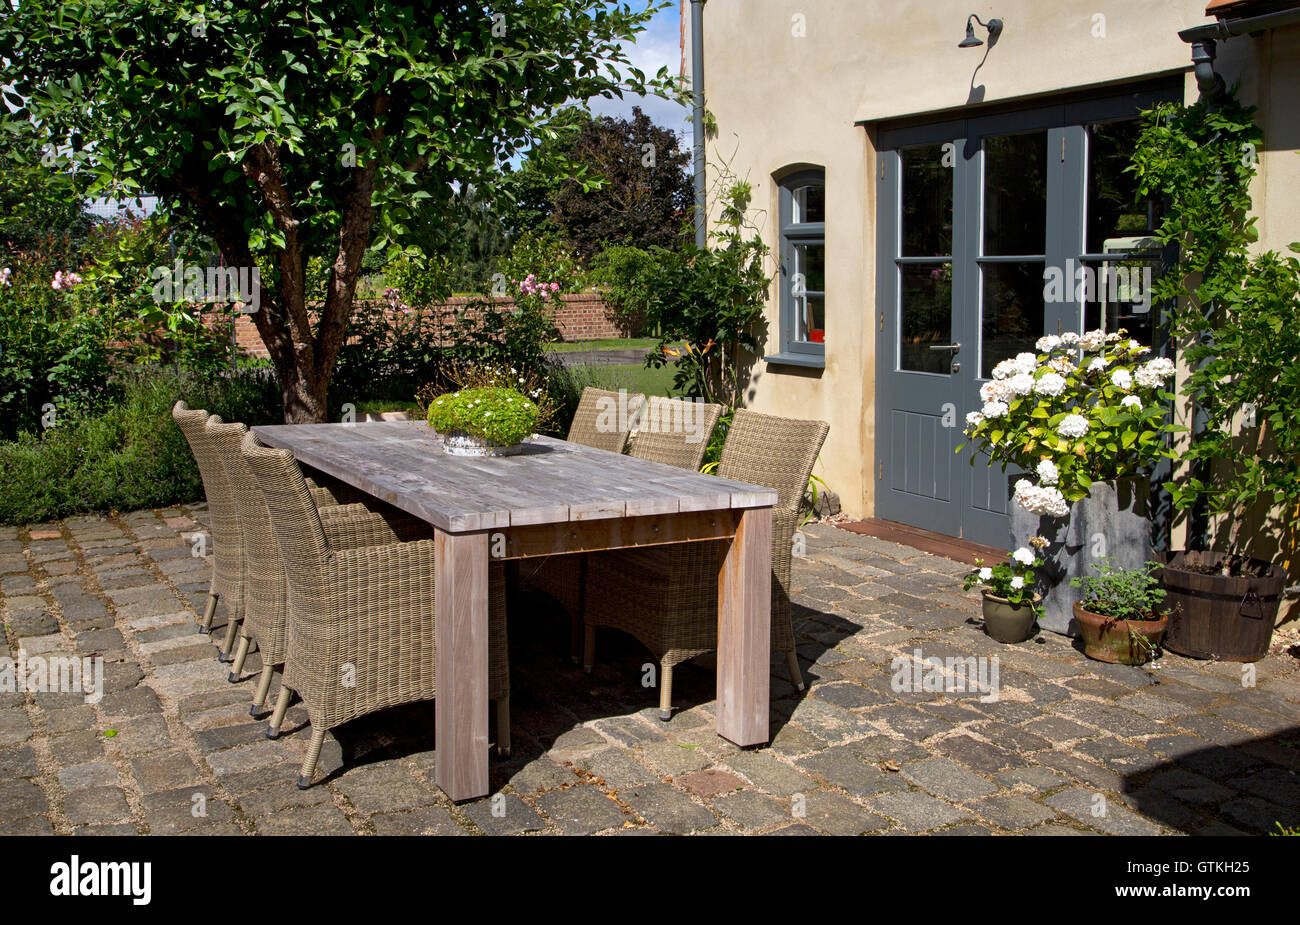 Giardino all'aperto da pranzo tavolo in legno e sedie, giardino inglese,Inghilterra Foto Stock